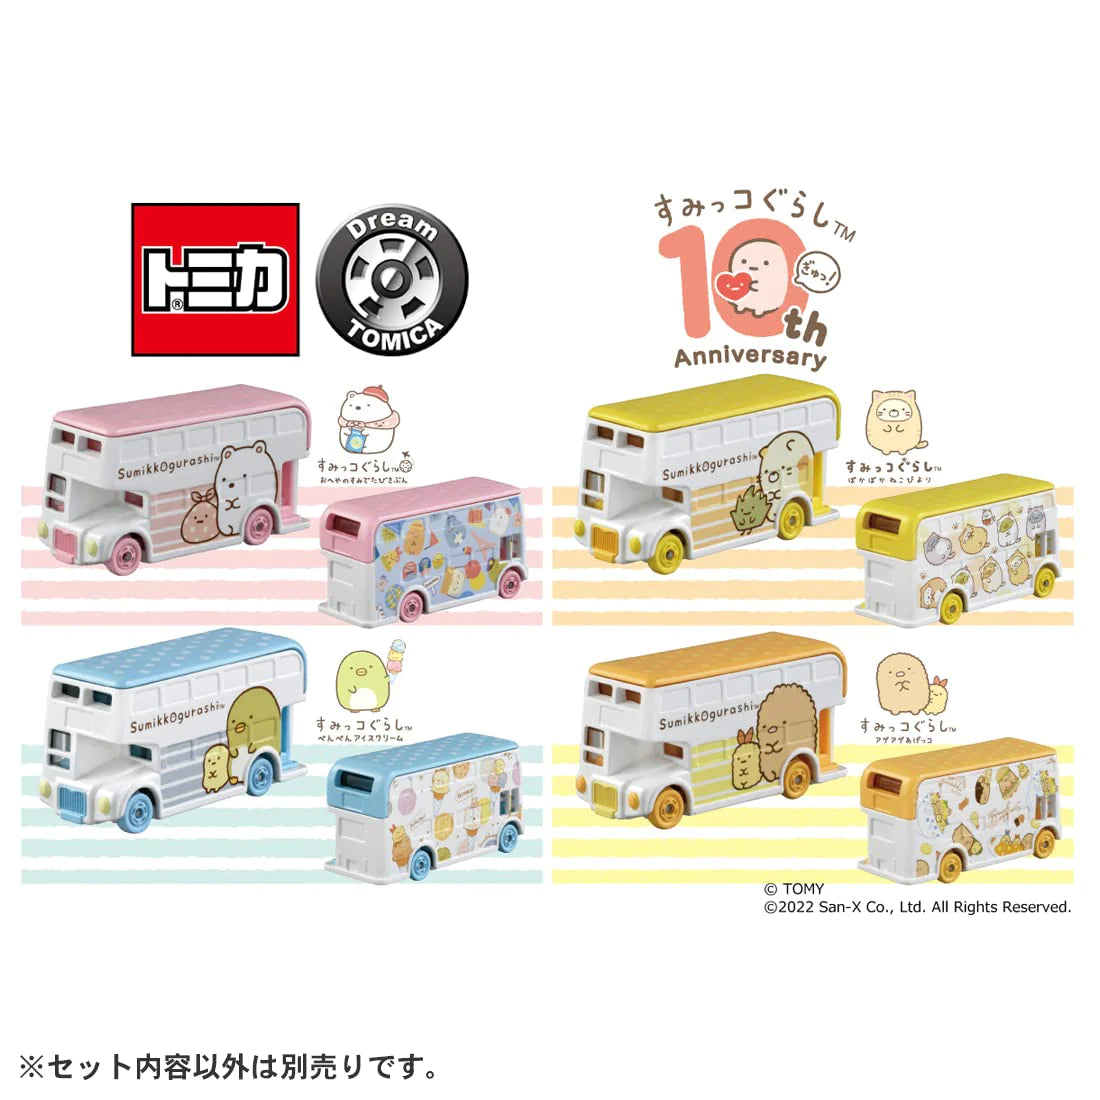 Dream Tomica SP Sumikko Gurashi 10th Anniversary Collection Neko Cat Bus